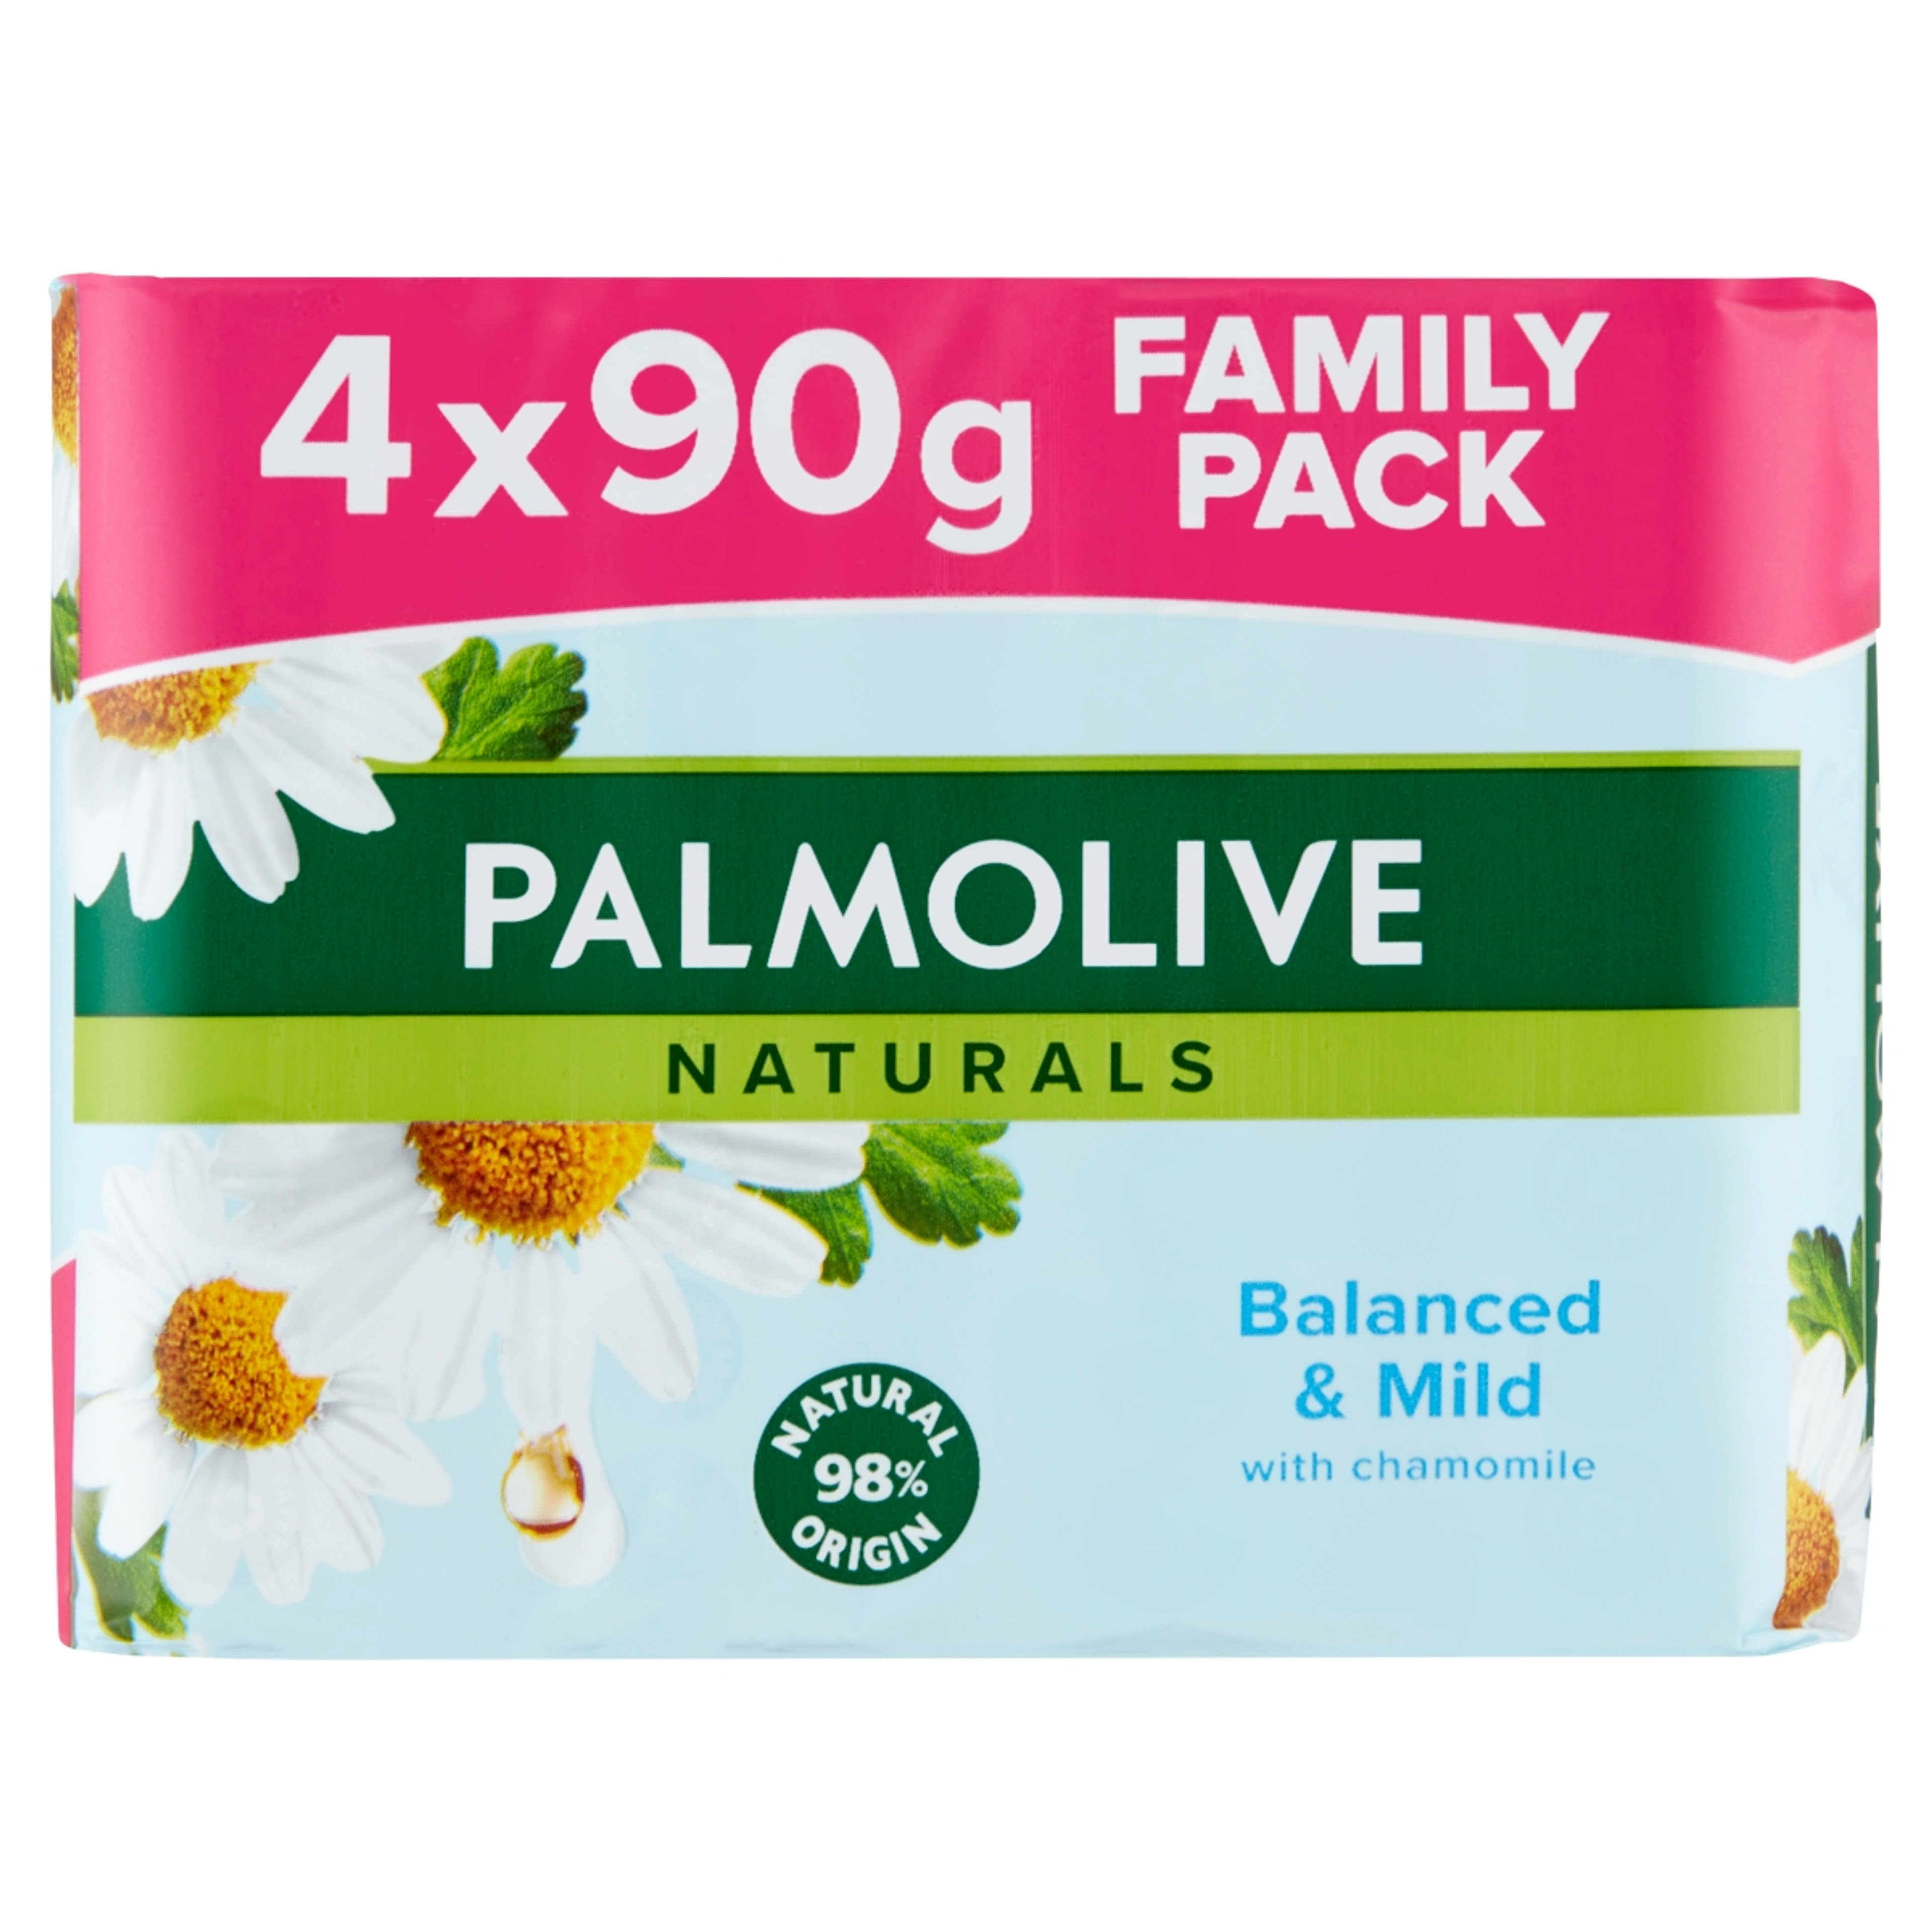 Palmolive Naturals Balanced & Mild pipereszappan kamilla kivonattal és E vitaminnal - 4 x 90 g